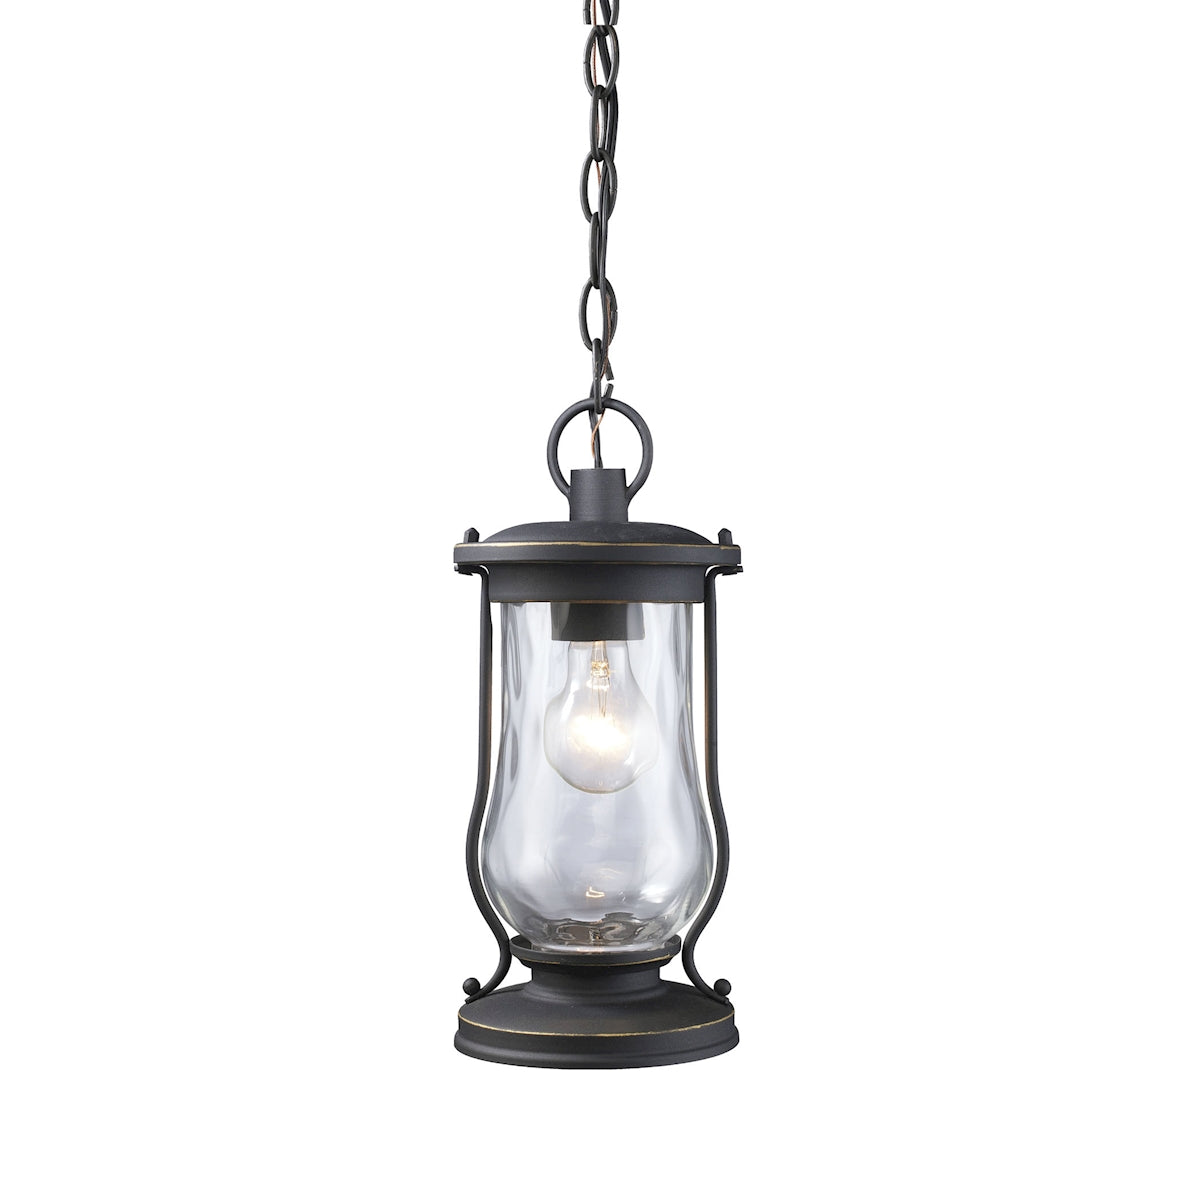 ELK Lighting 43017/1 Farmstead 1-Light Outdoor Hanging Lantern in Matte Black